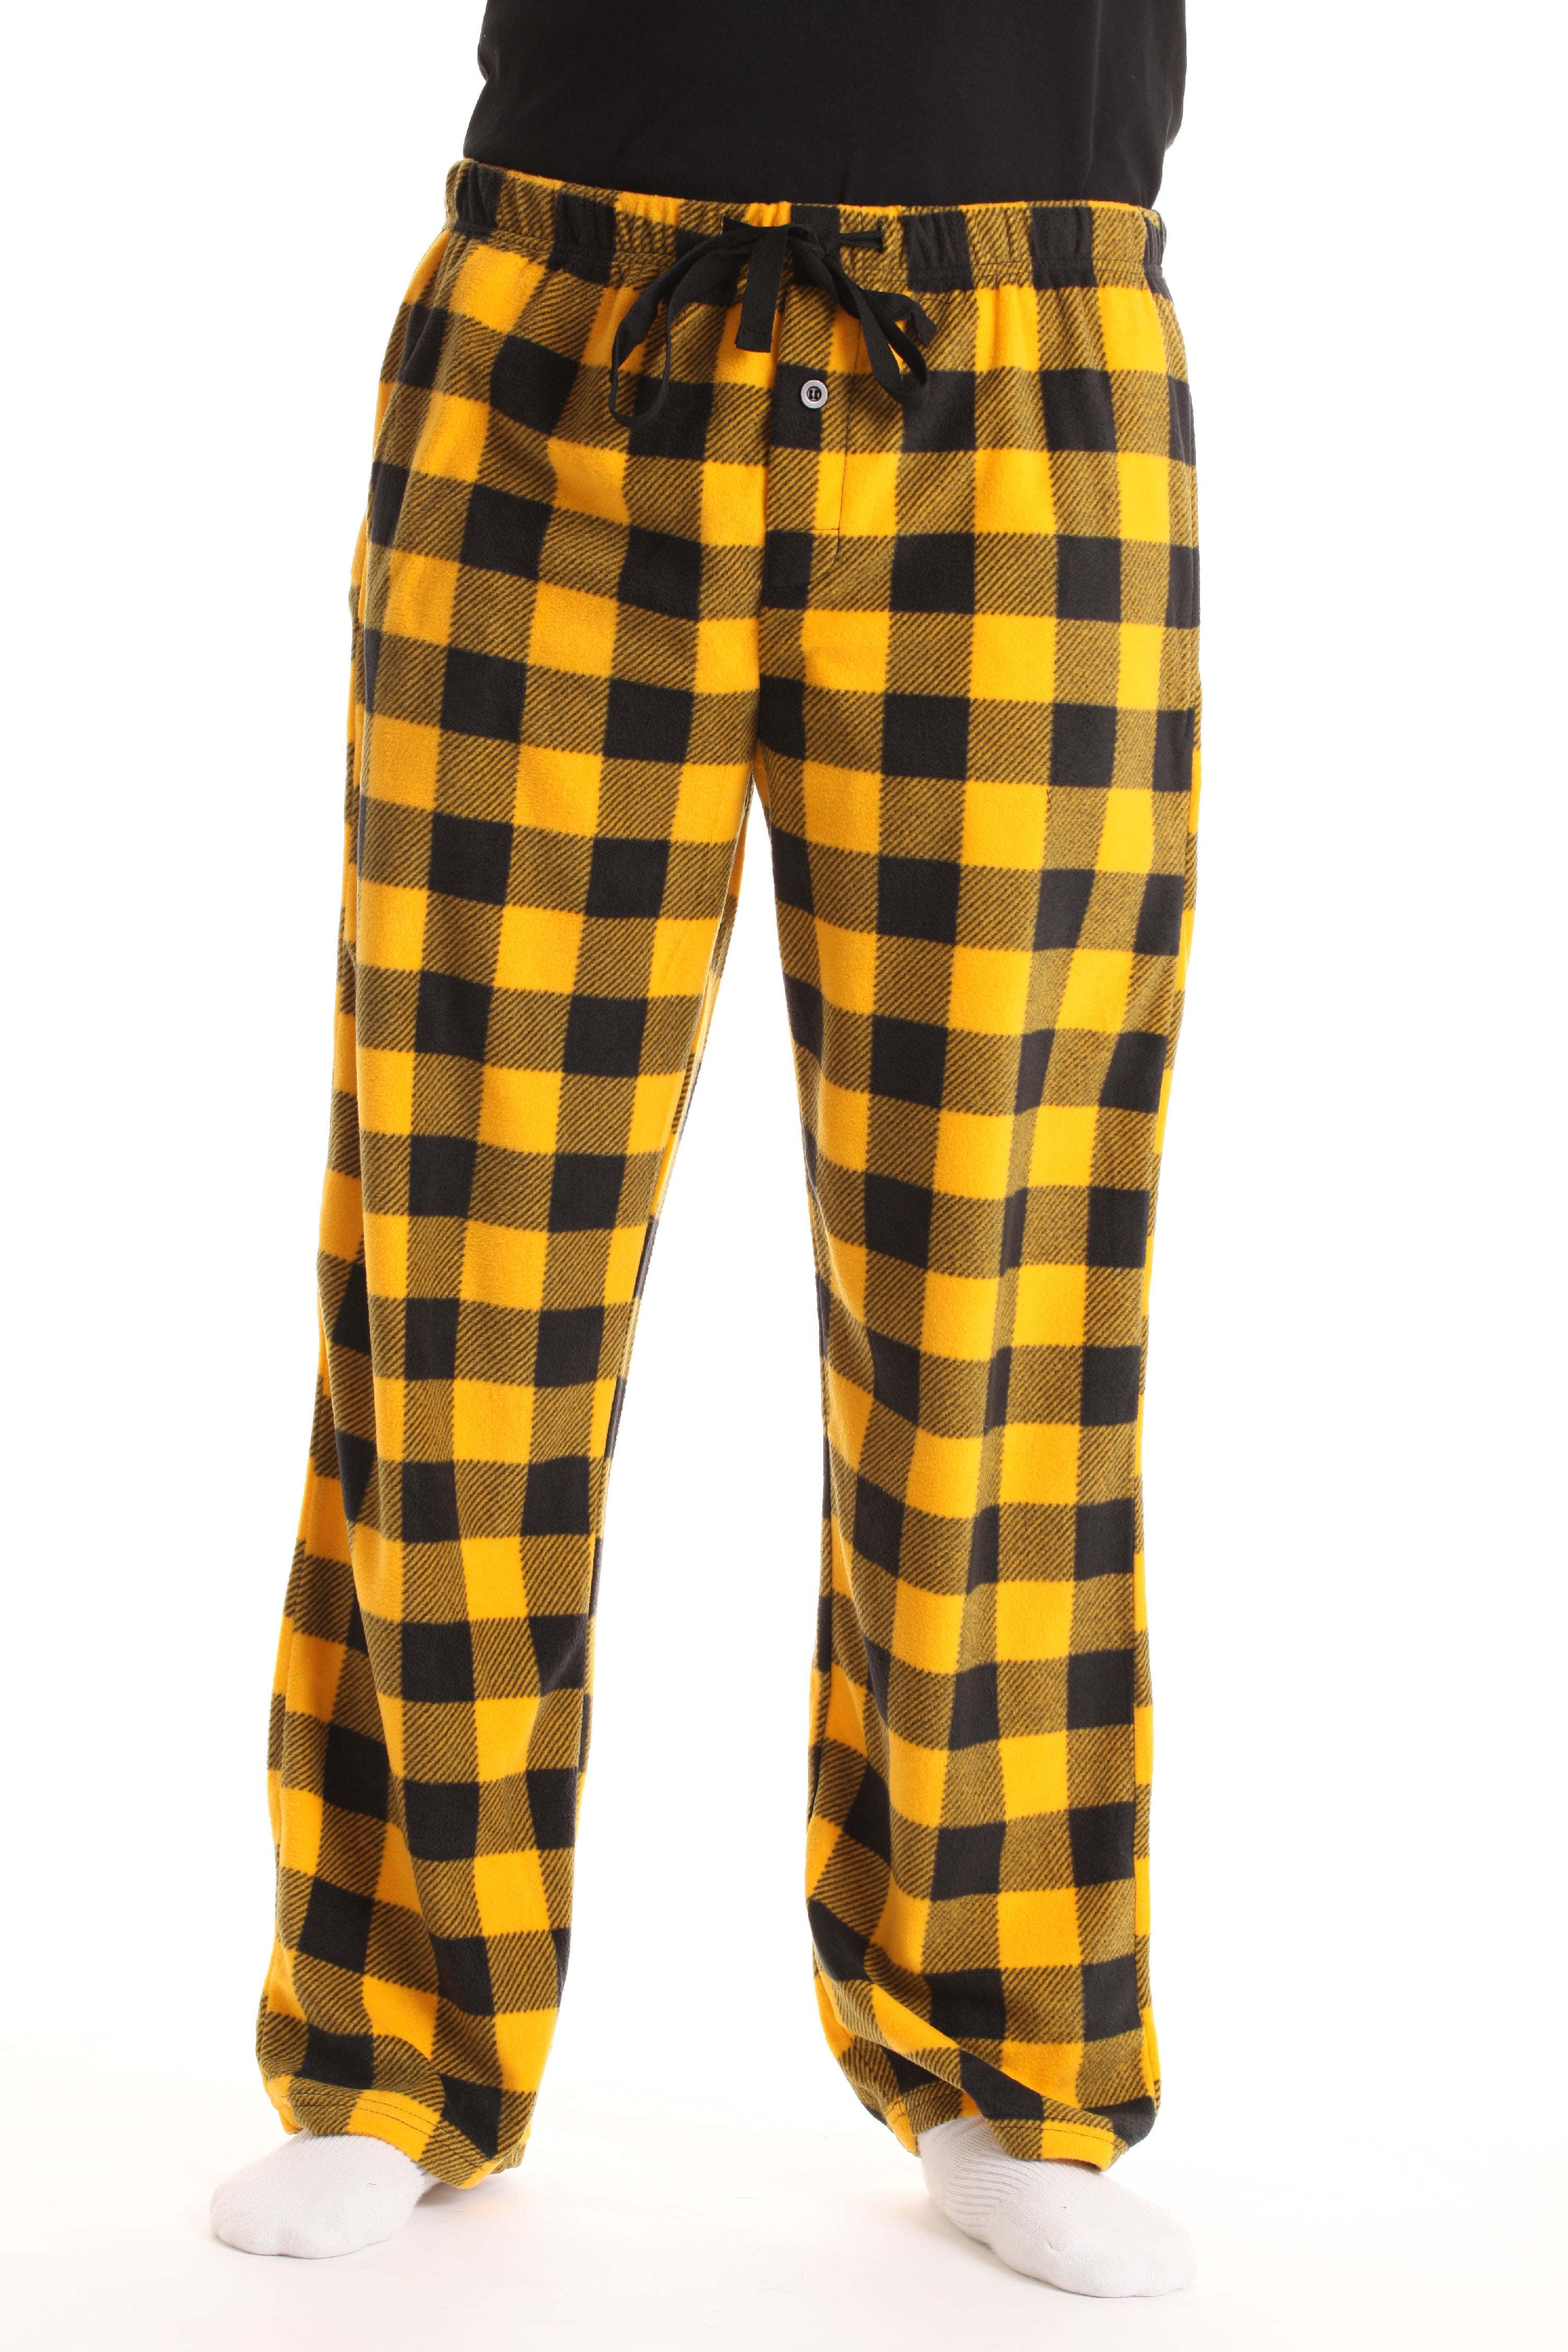 followme Microfleece Men's Buffalo Plaid Pajama Pants with Pockets